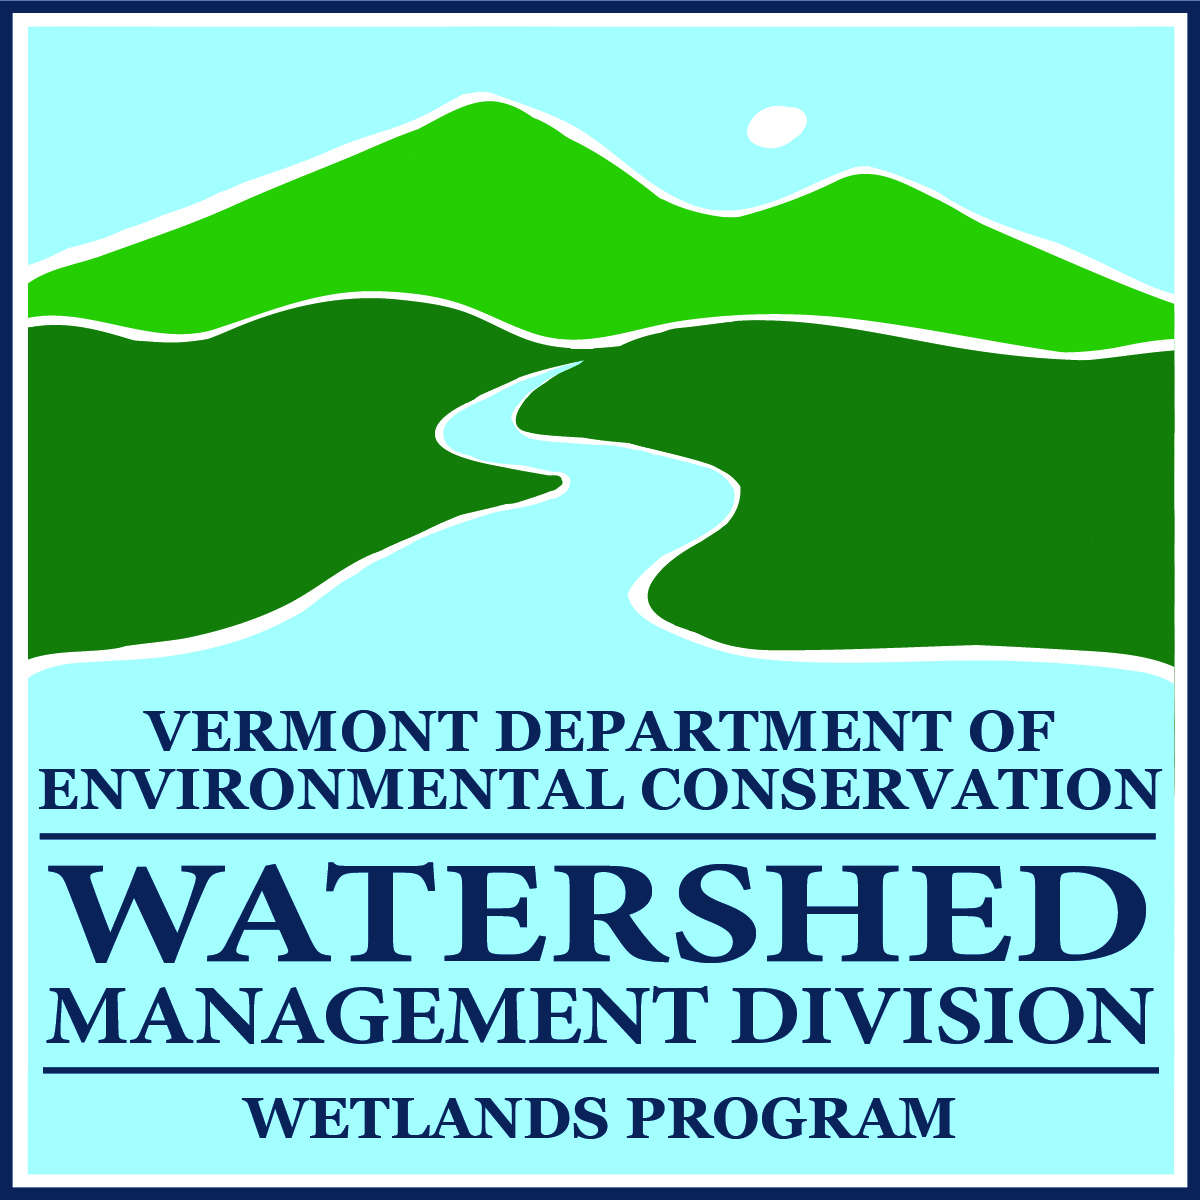 Vermont Dept. of Environmental Conservation Seeks Wetlands Ecologist